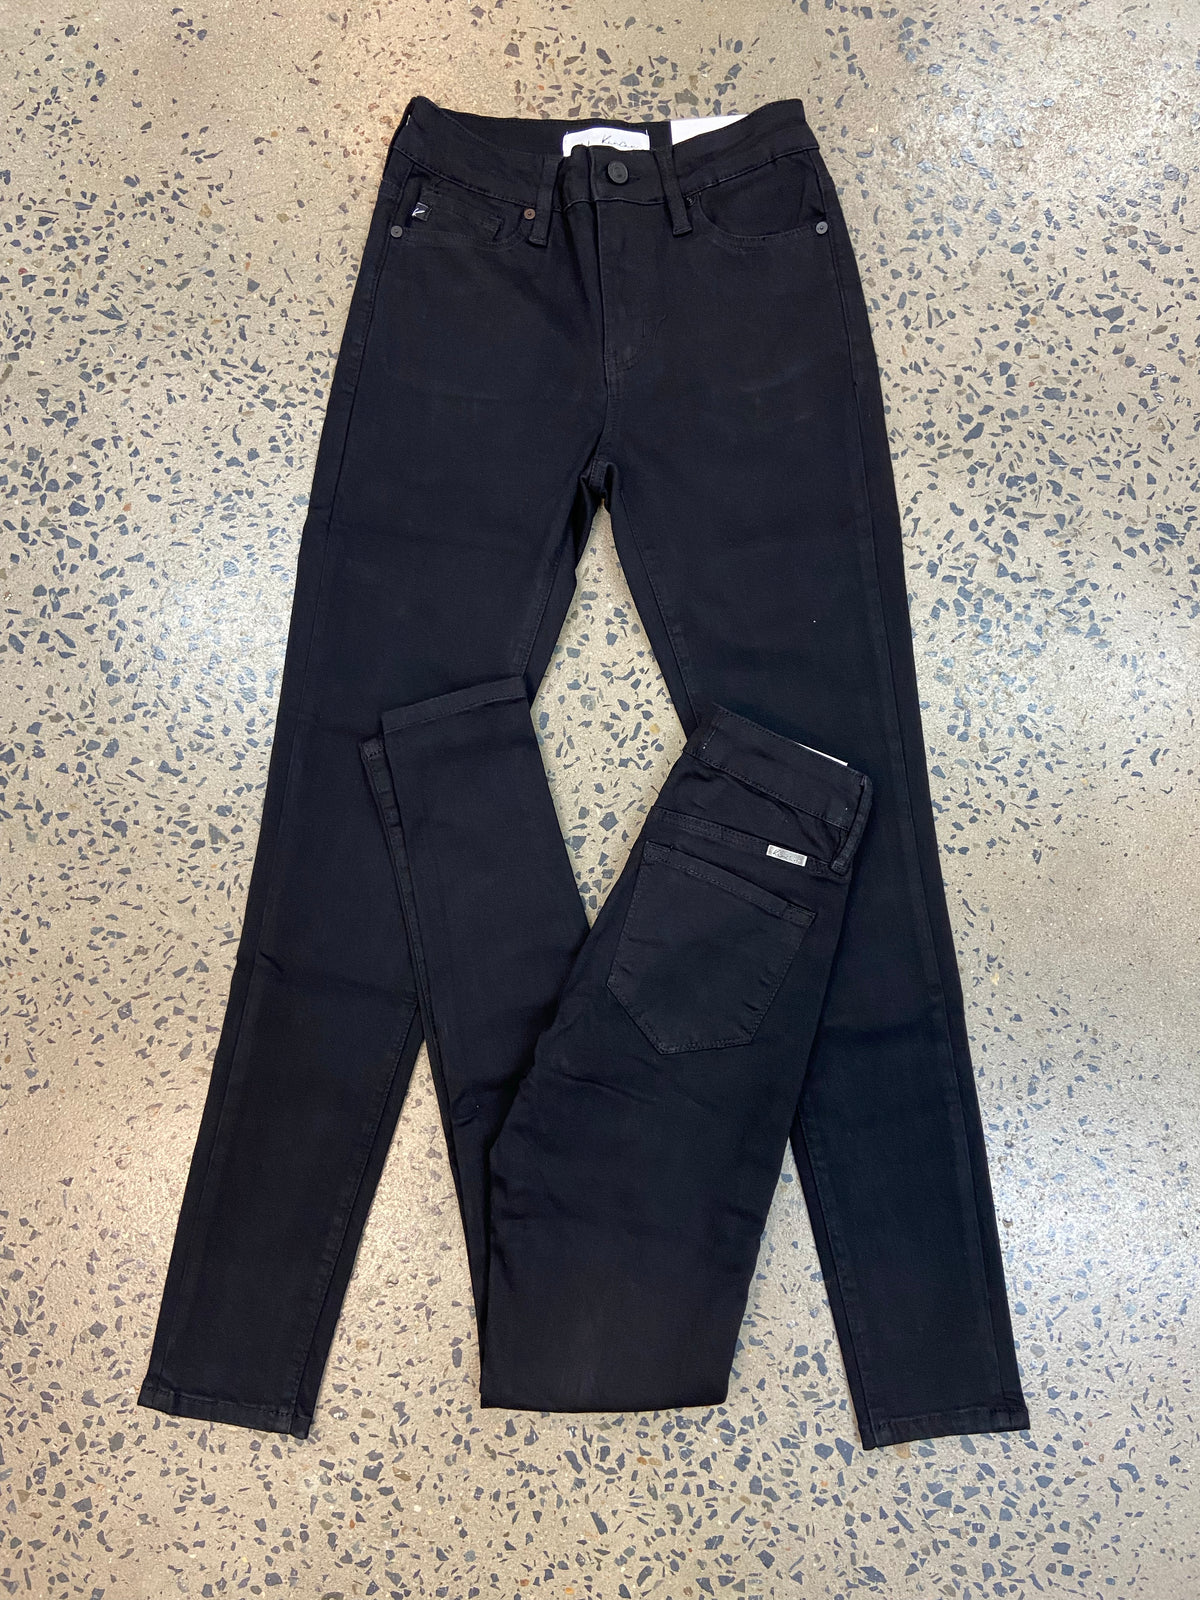 KanCan Jeans - High Rise Skinny KC6009BK